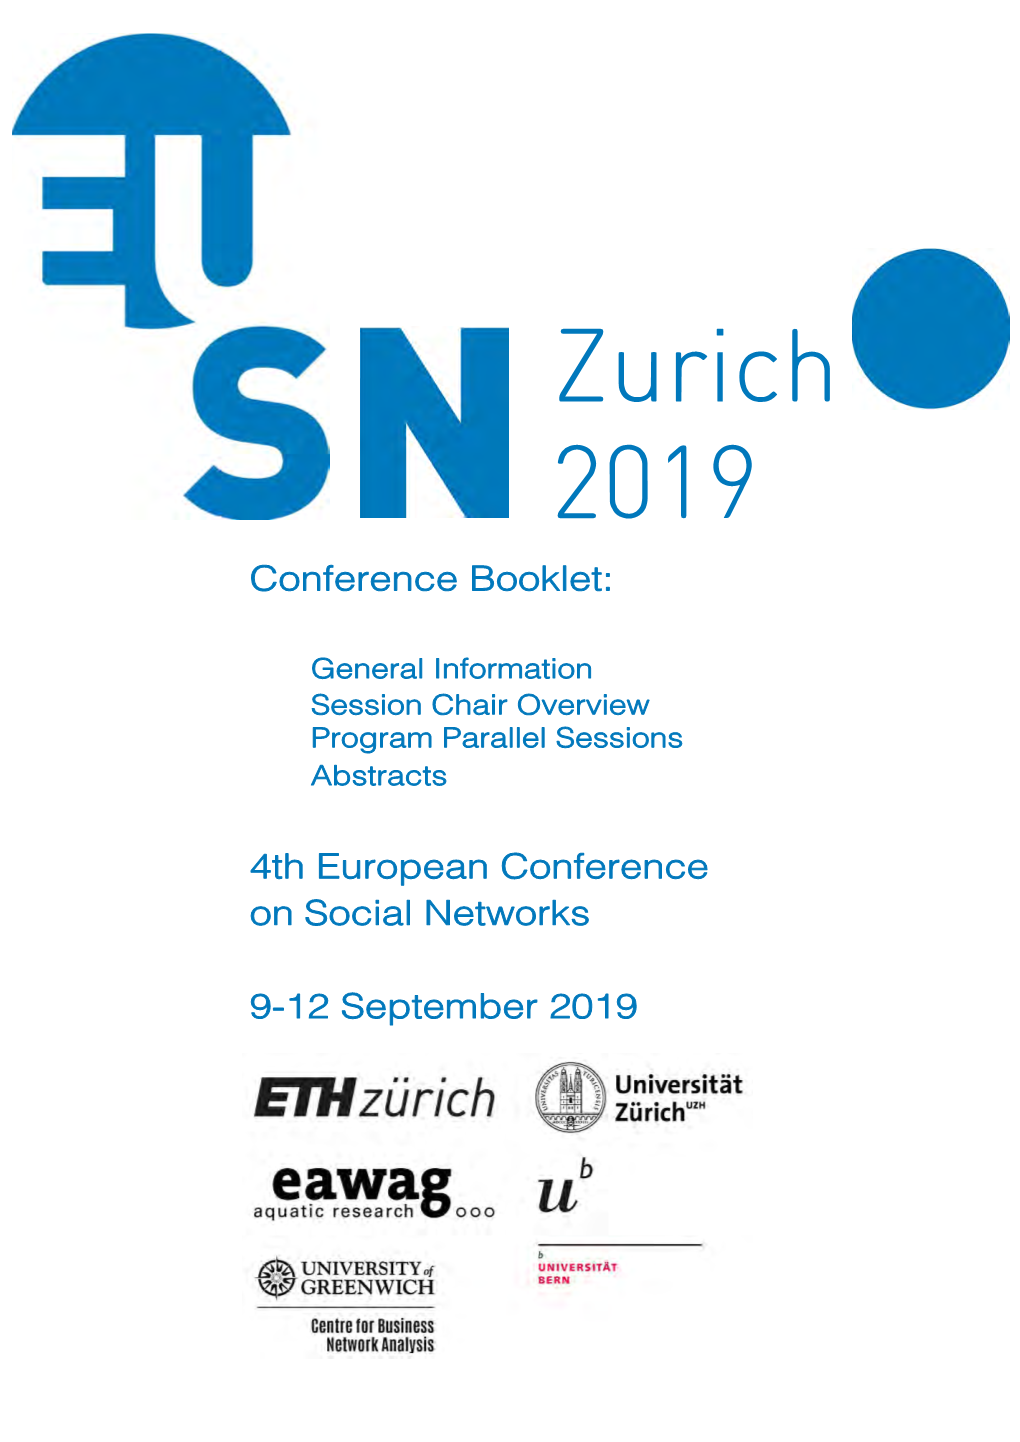 Zurich 2019 Conference Booklet